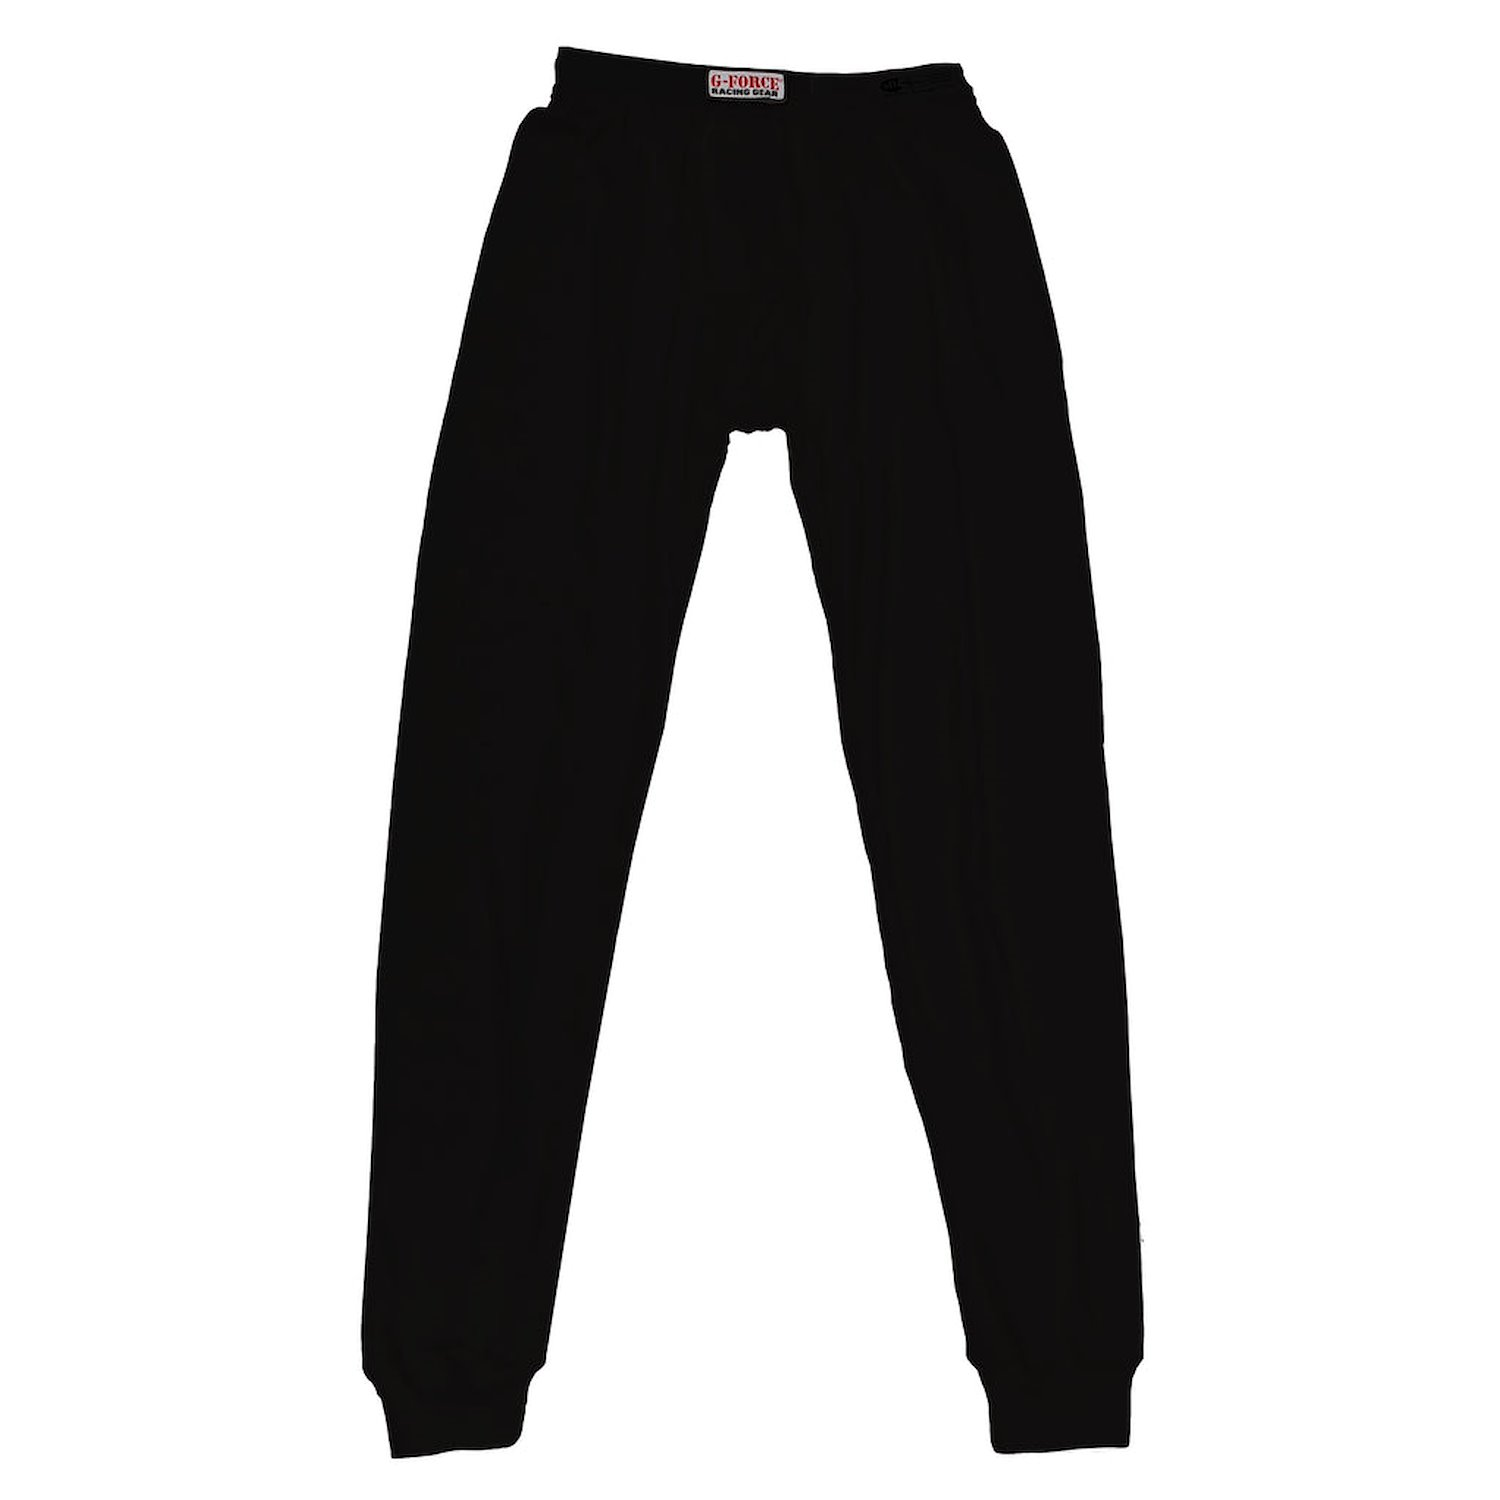 4161MEDBK Underwear Pants, Medium, Black